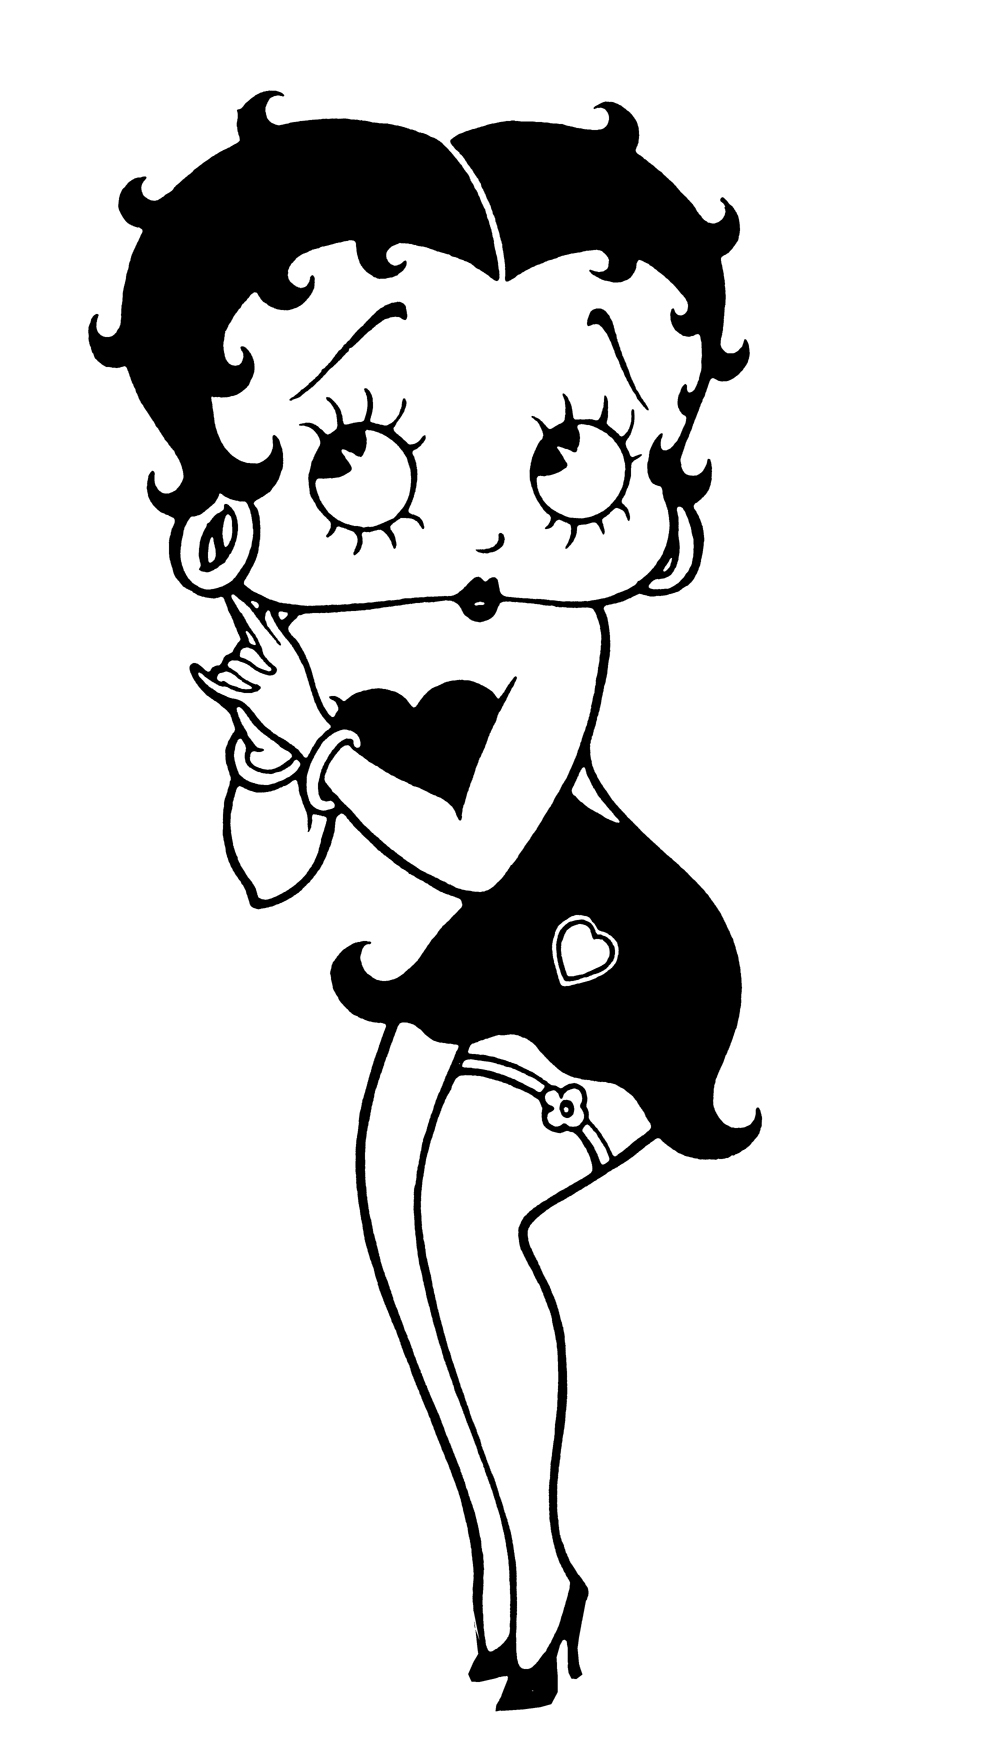 Betty Boop Image